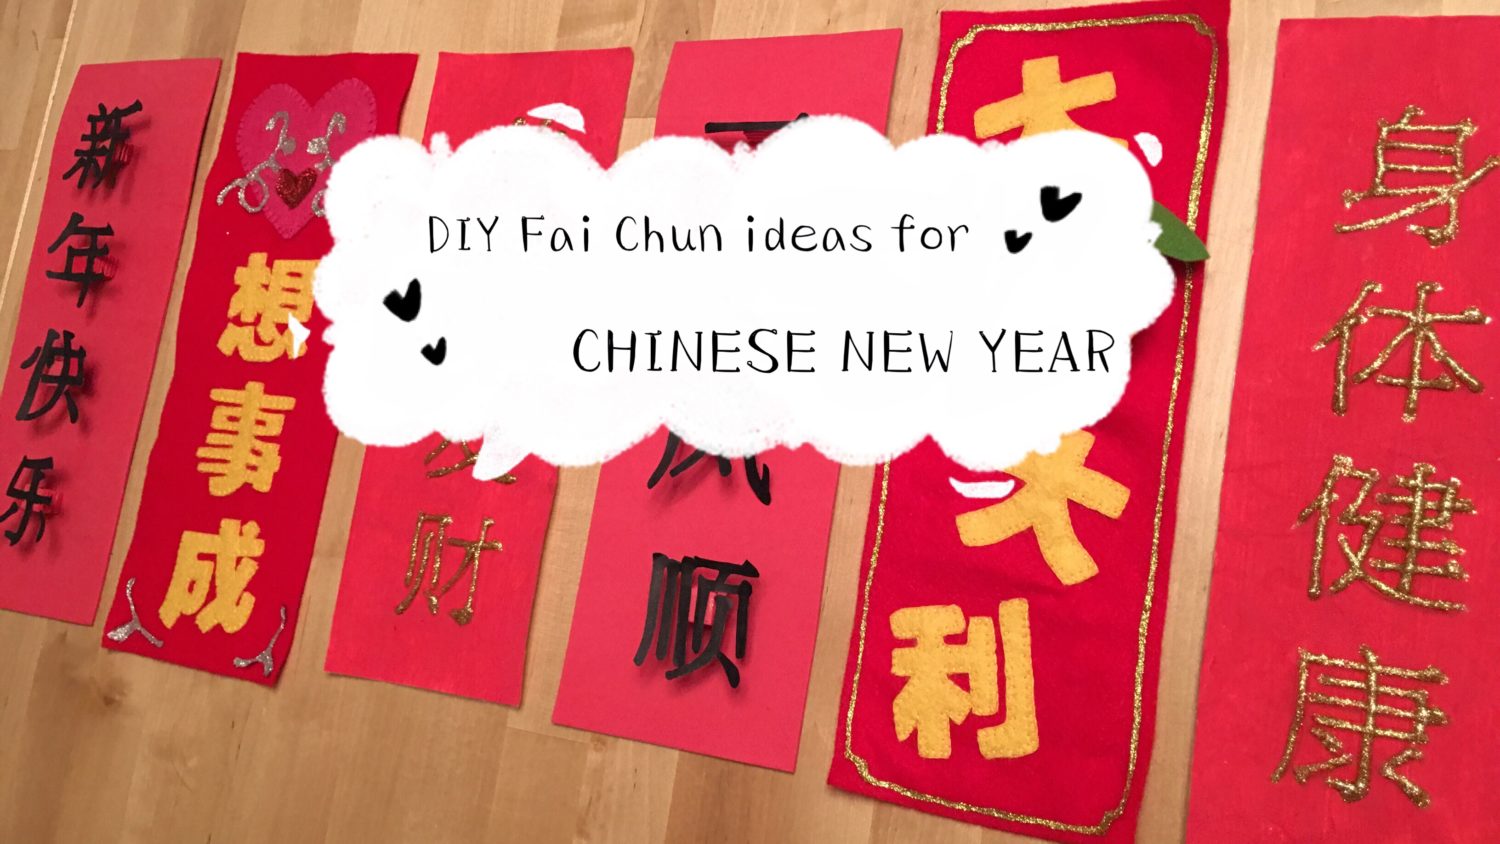 3 DIY Fai Chun ideas for Chinese New Year